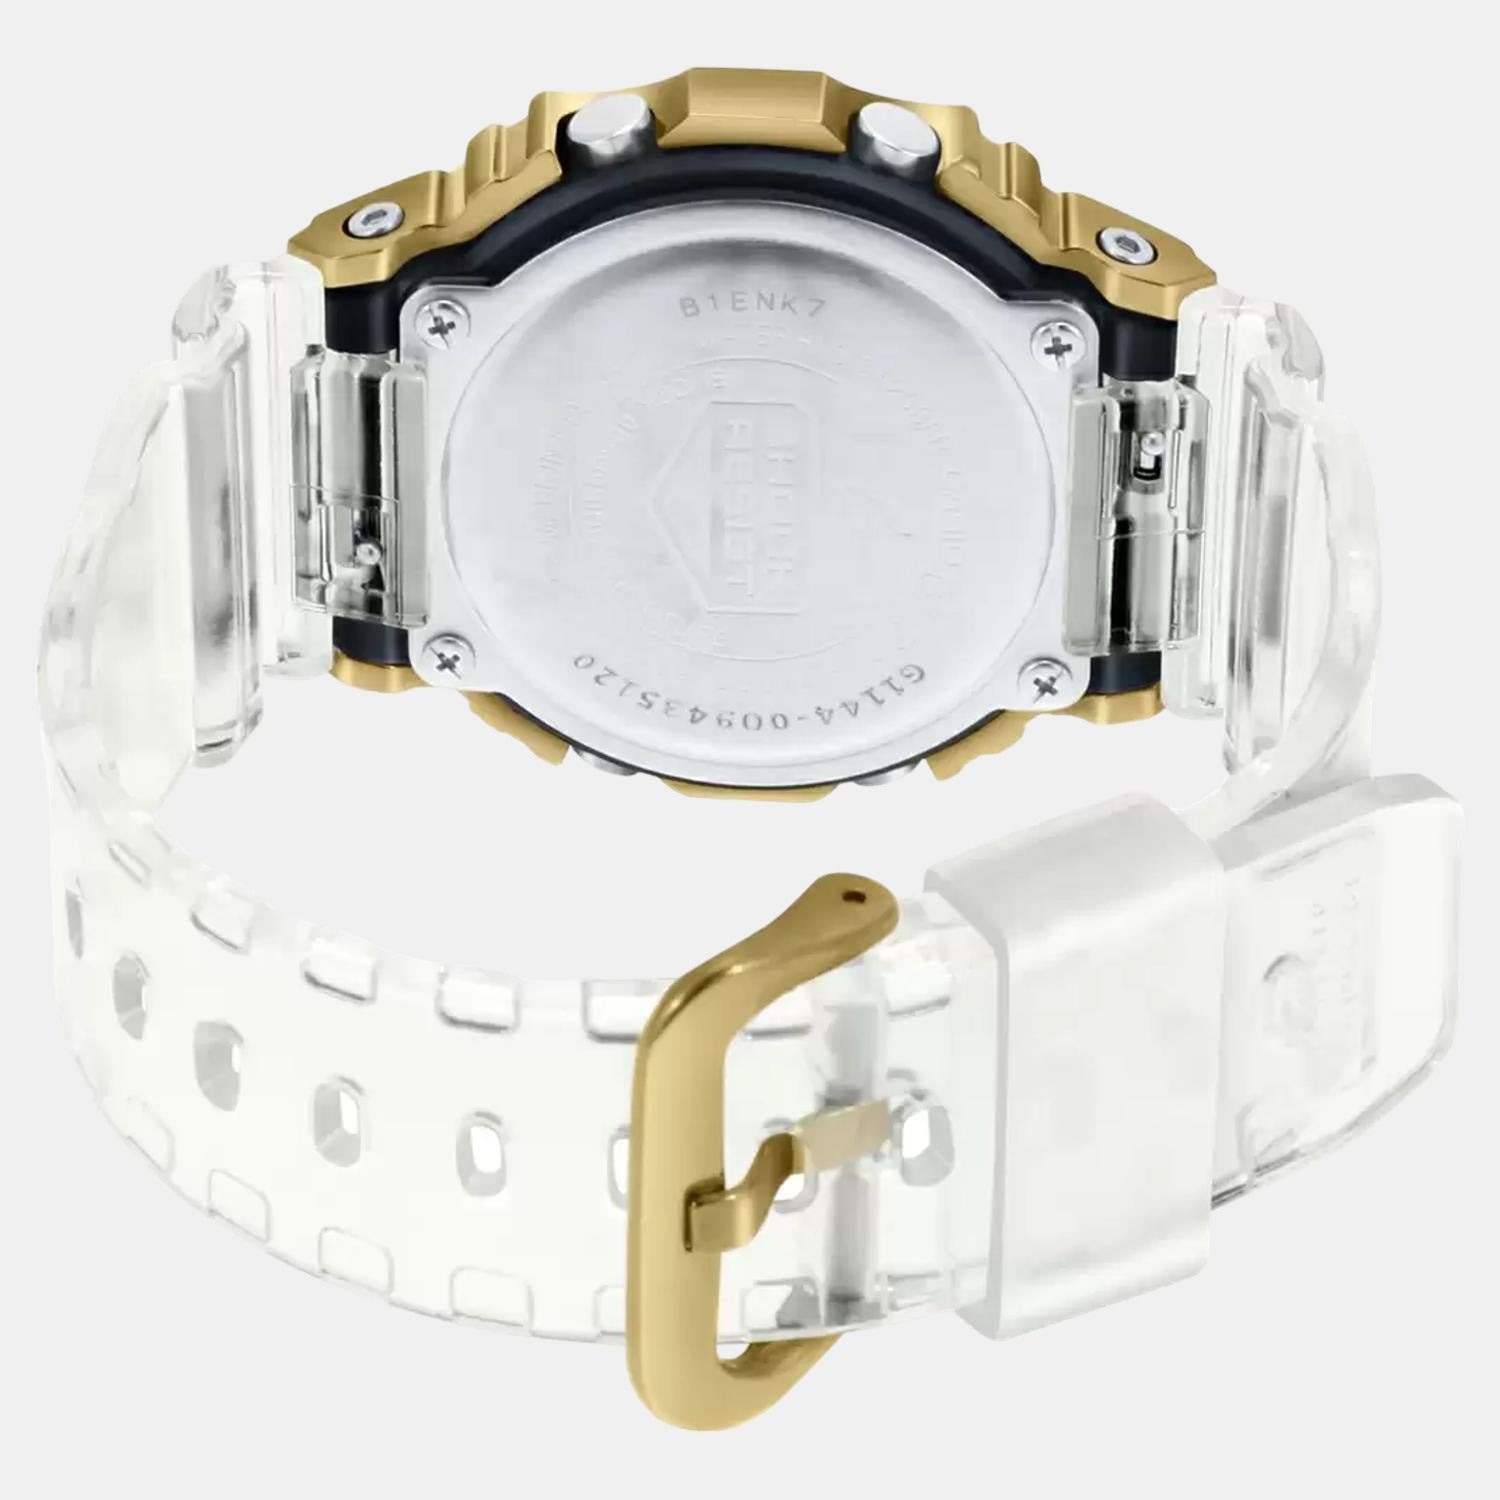 casio-resin-gold-analog-digital-mens-watch-g1144